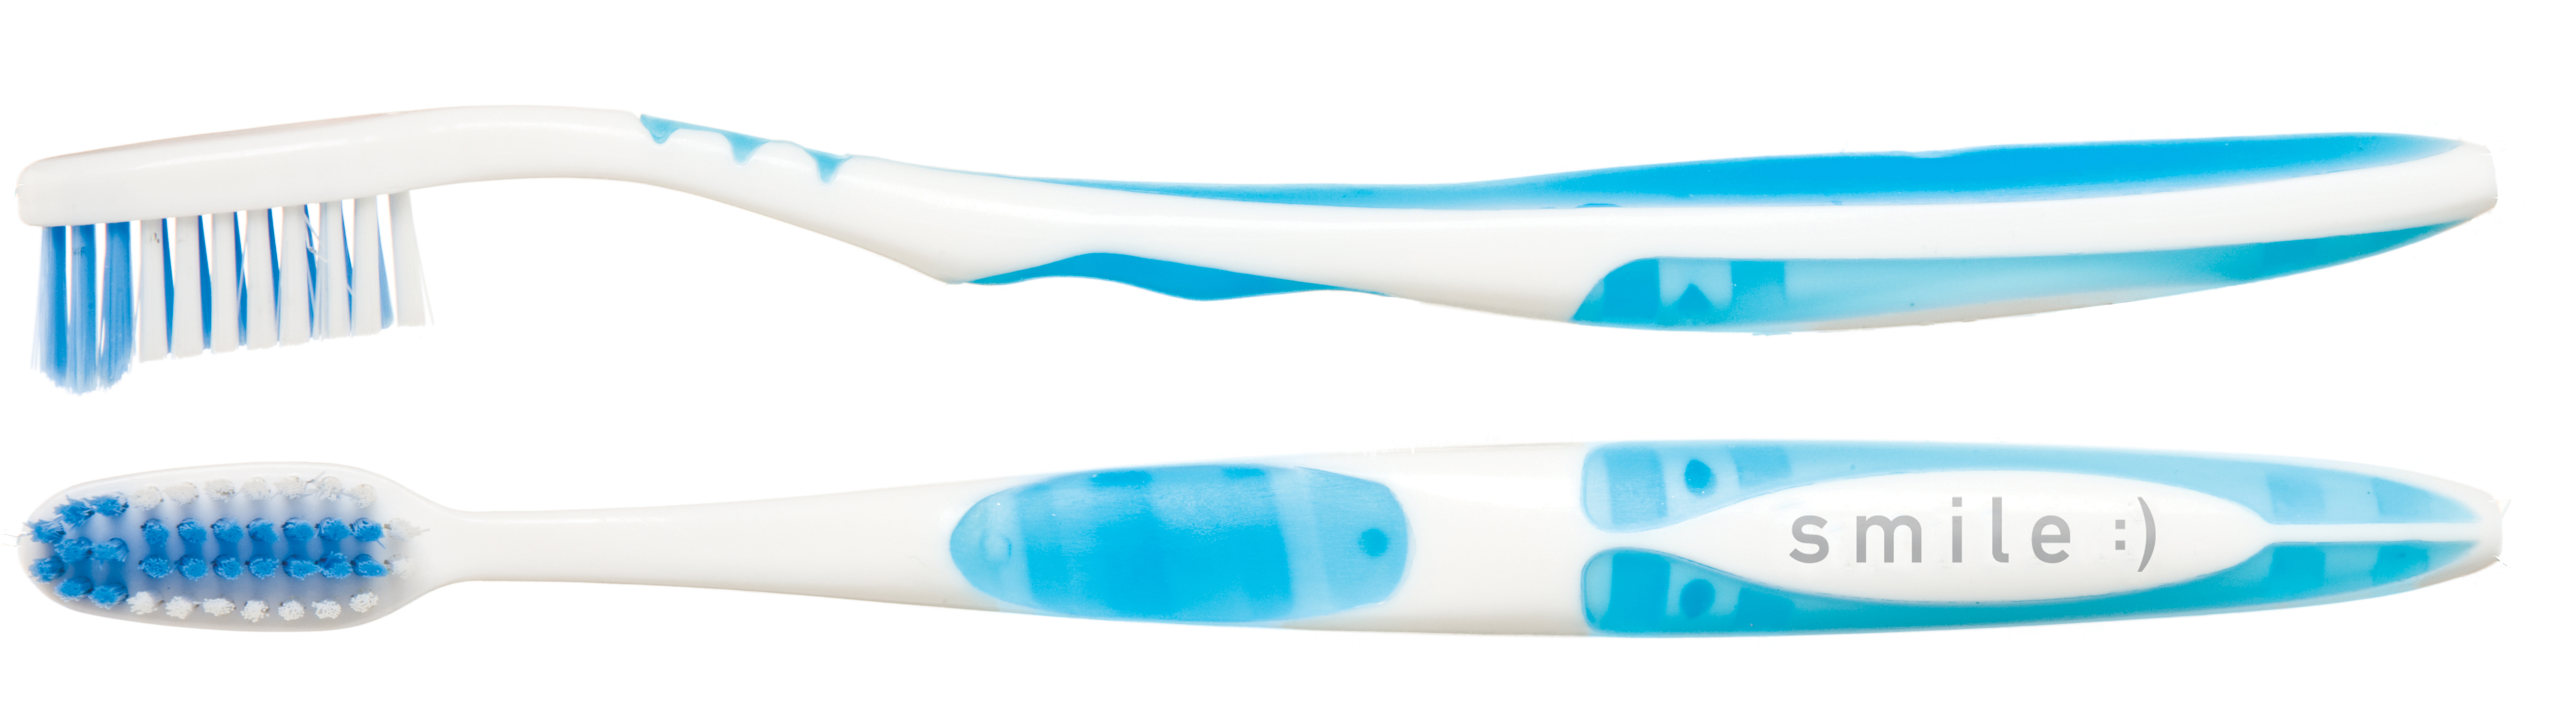 Opalescence toothbrush.jpg